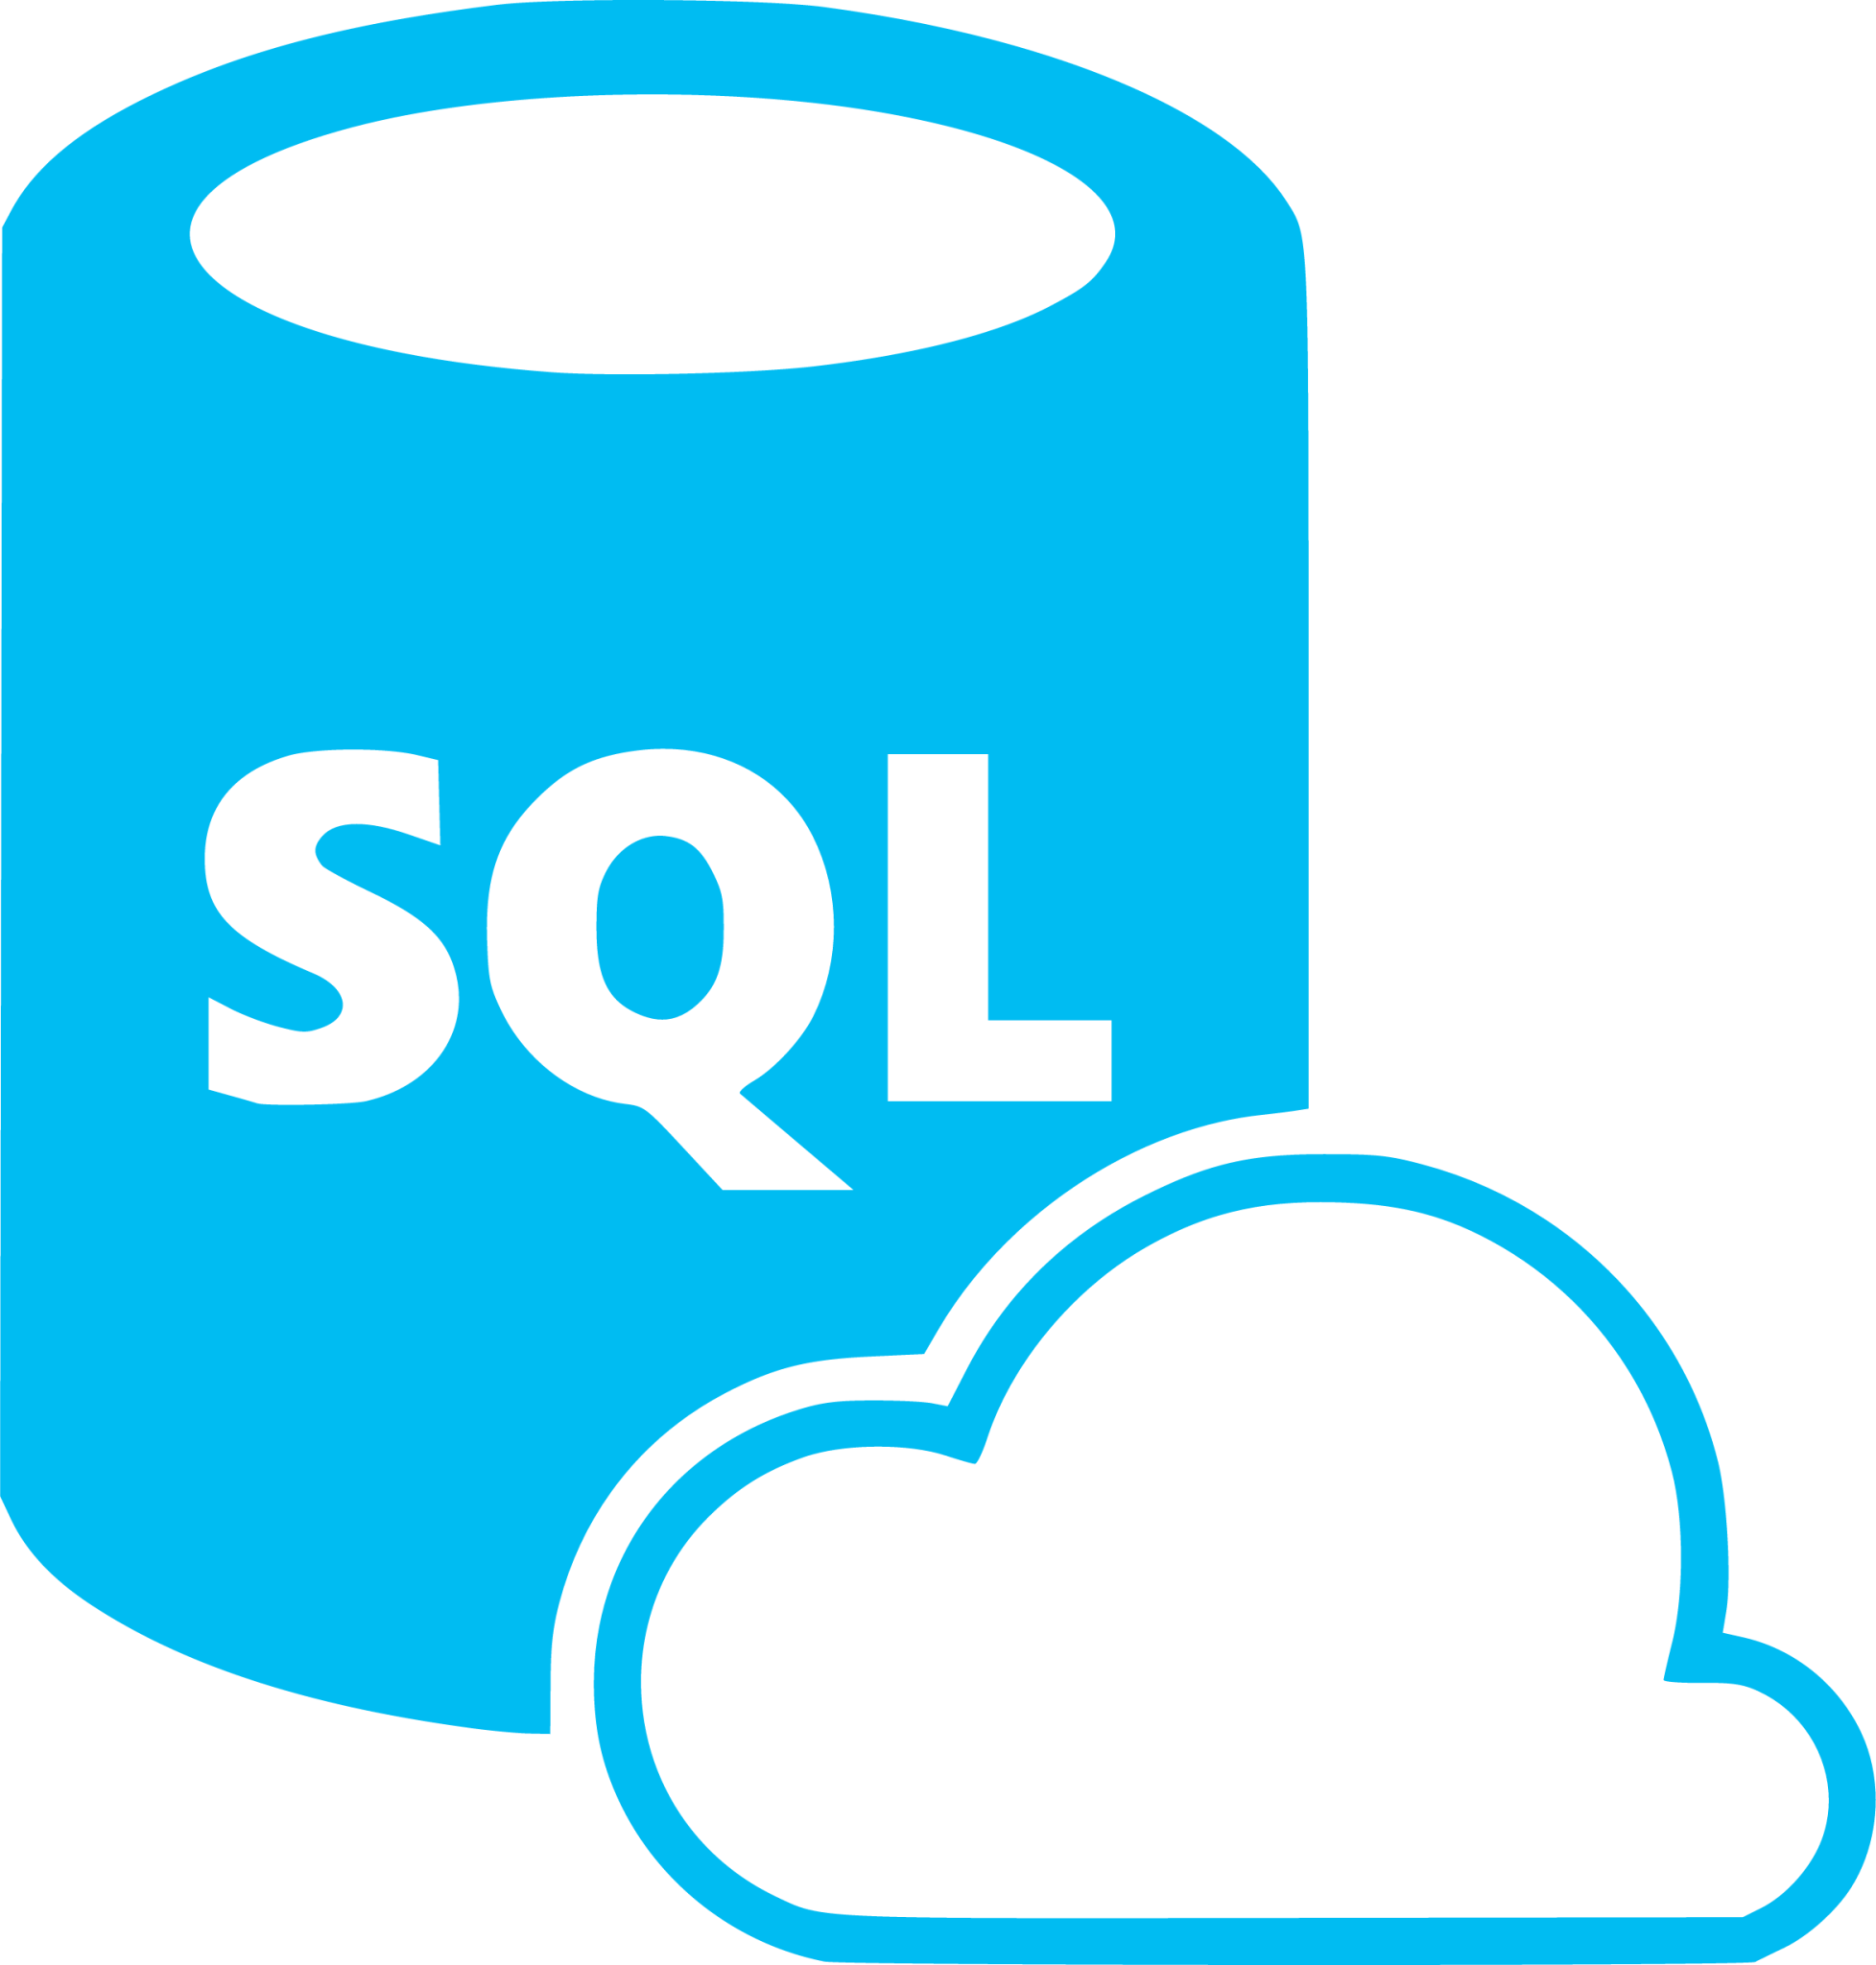 SQL Database (SQL Azure) icon